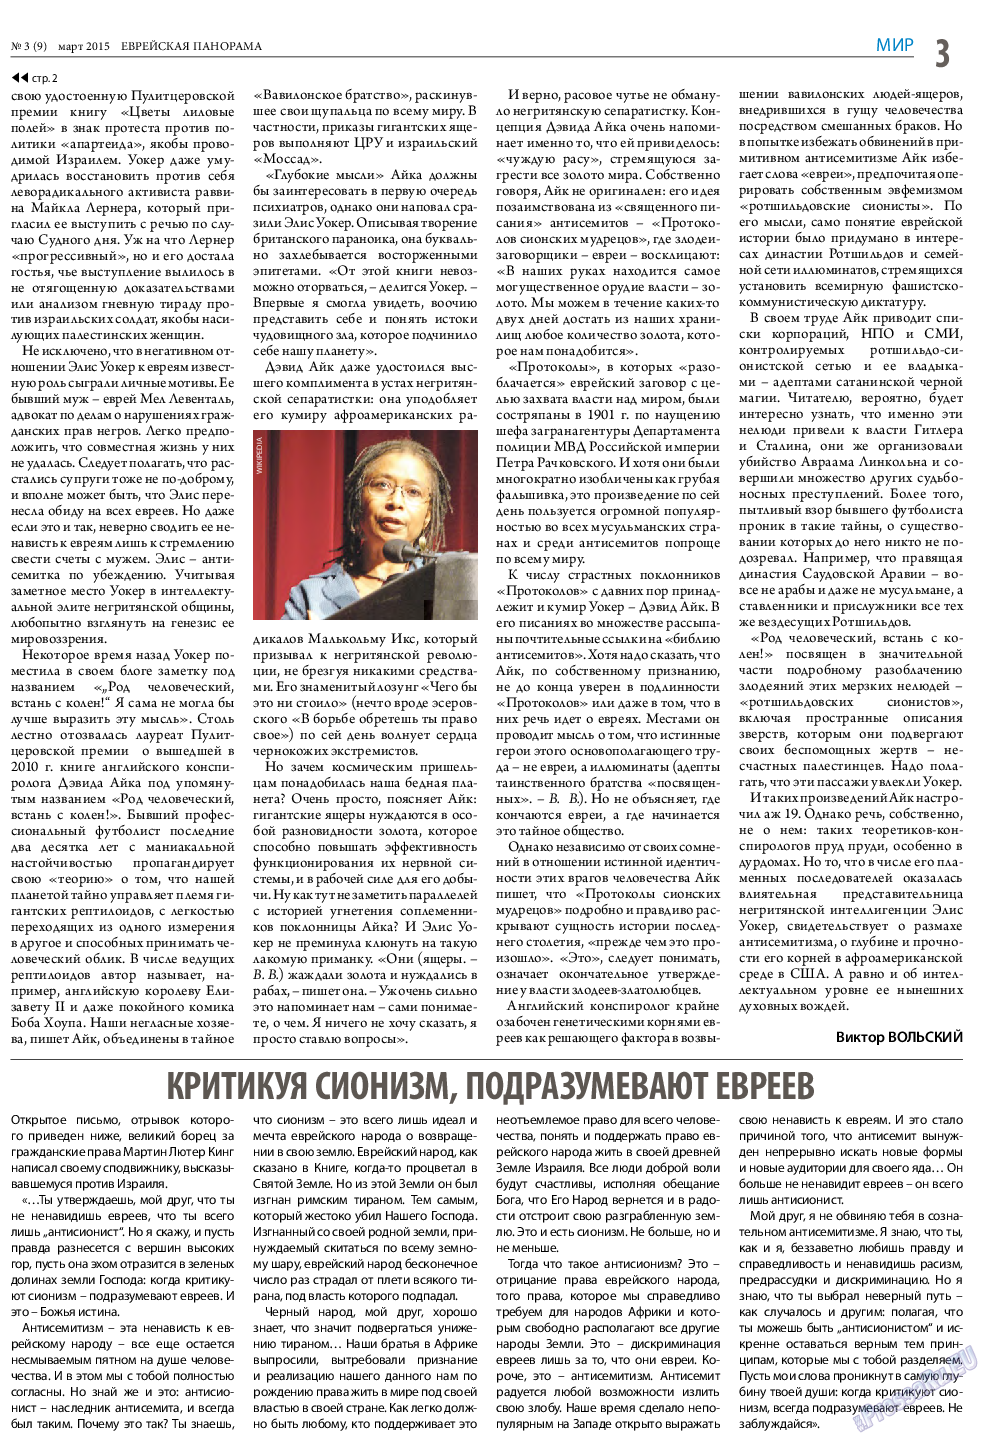 Еврейская панорама, газета. 2015 №3 стр.3